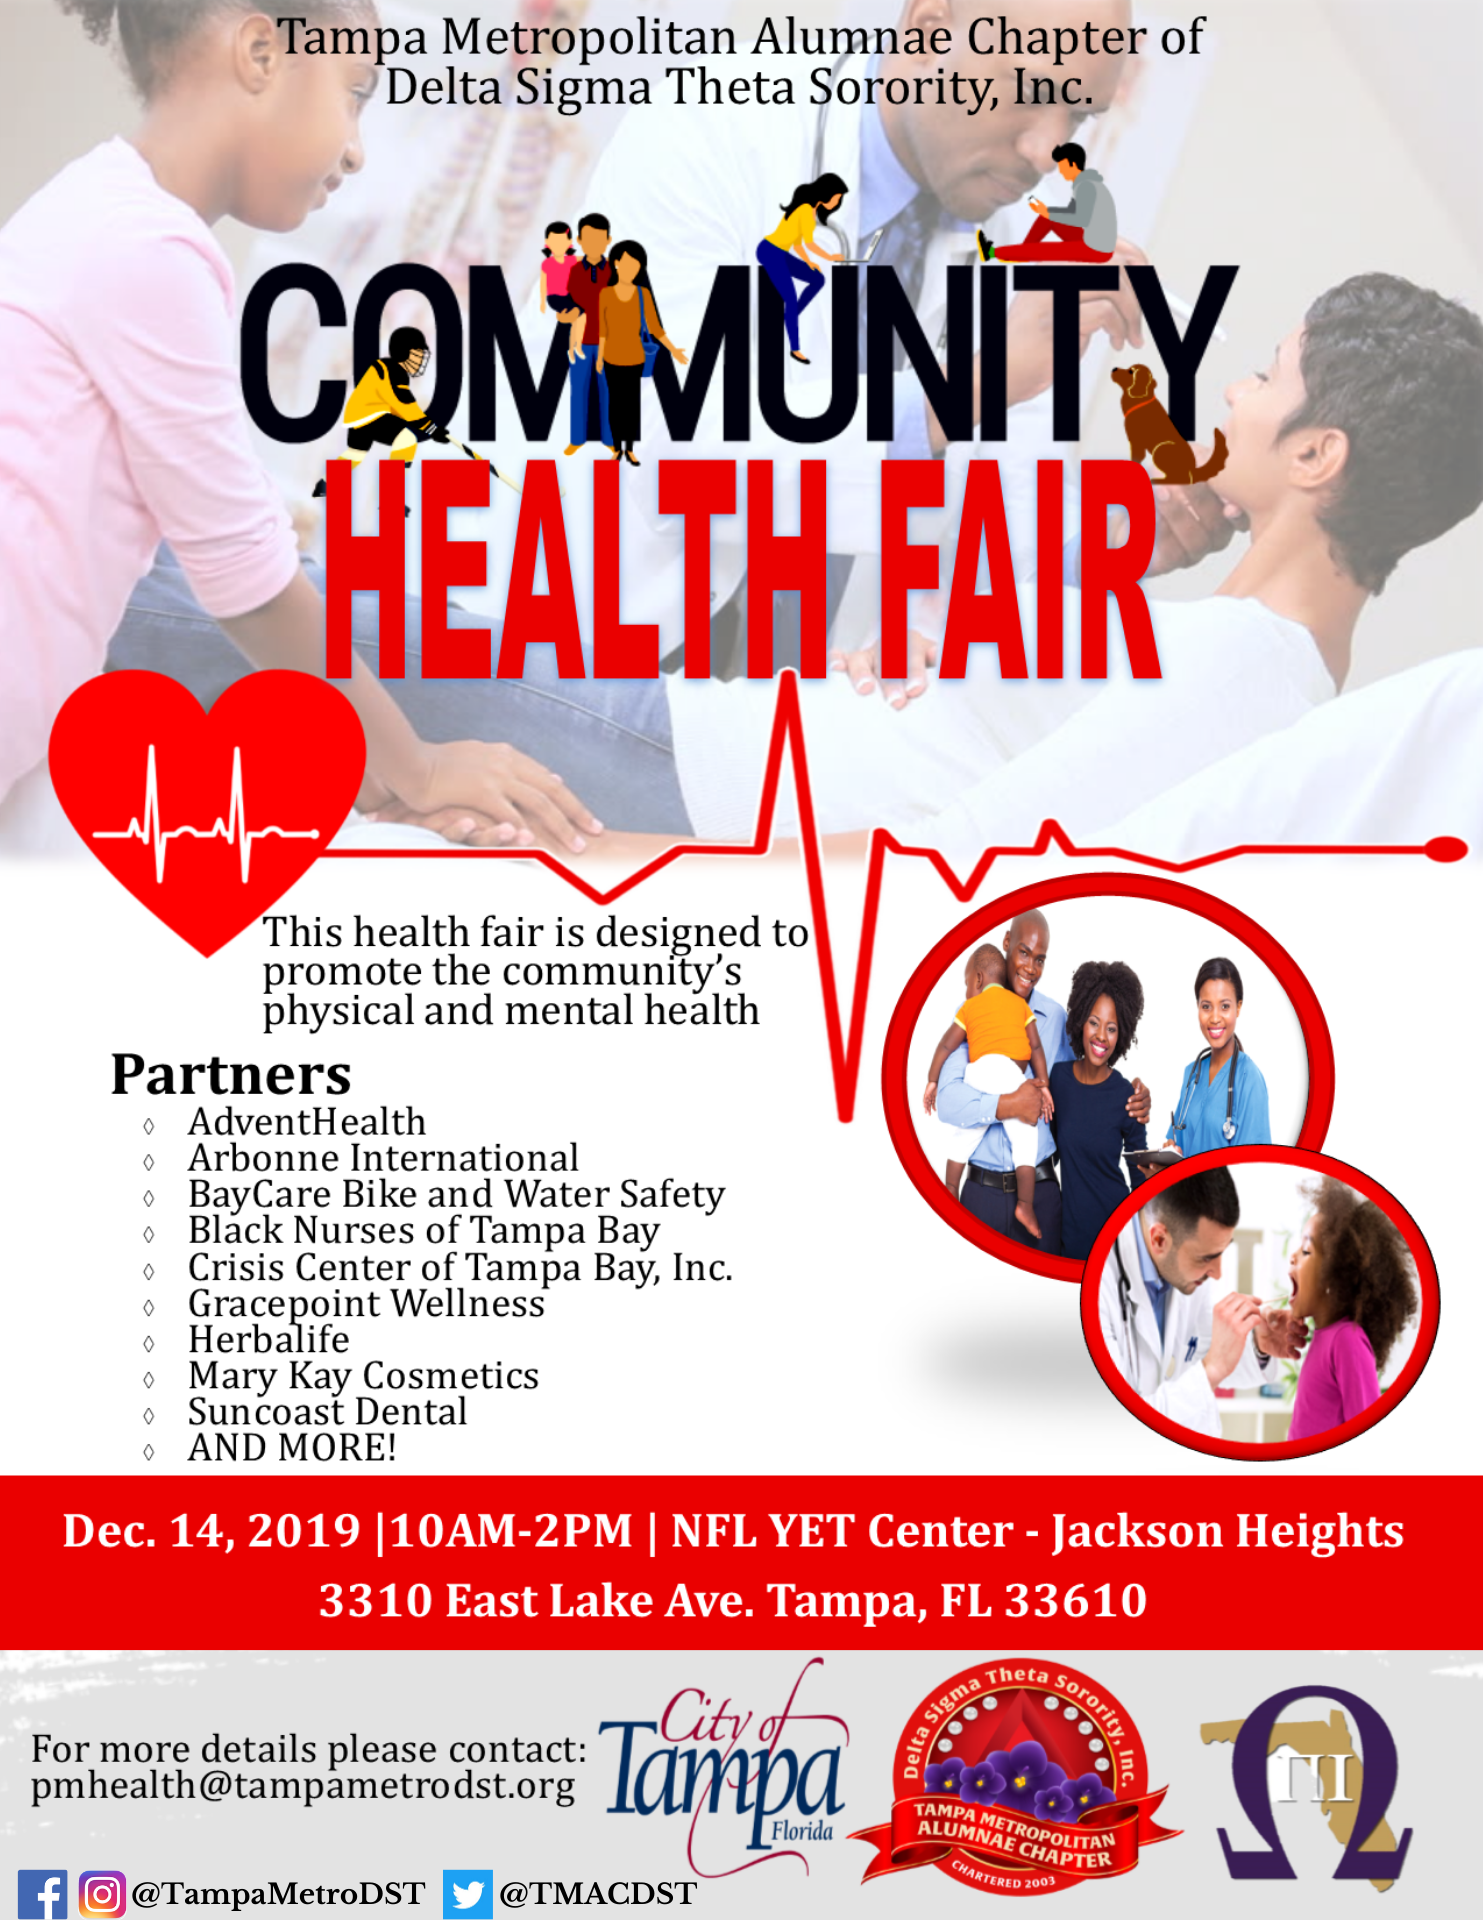 Physical and Mental Health Community Health Fair Tampa Metropolitan